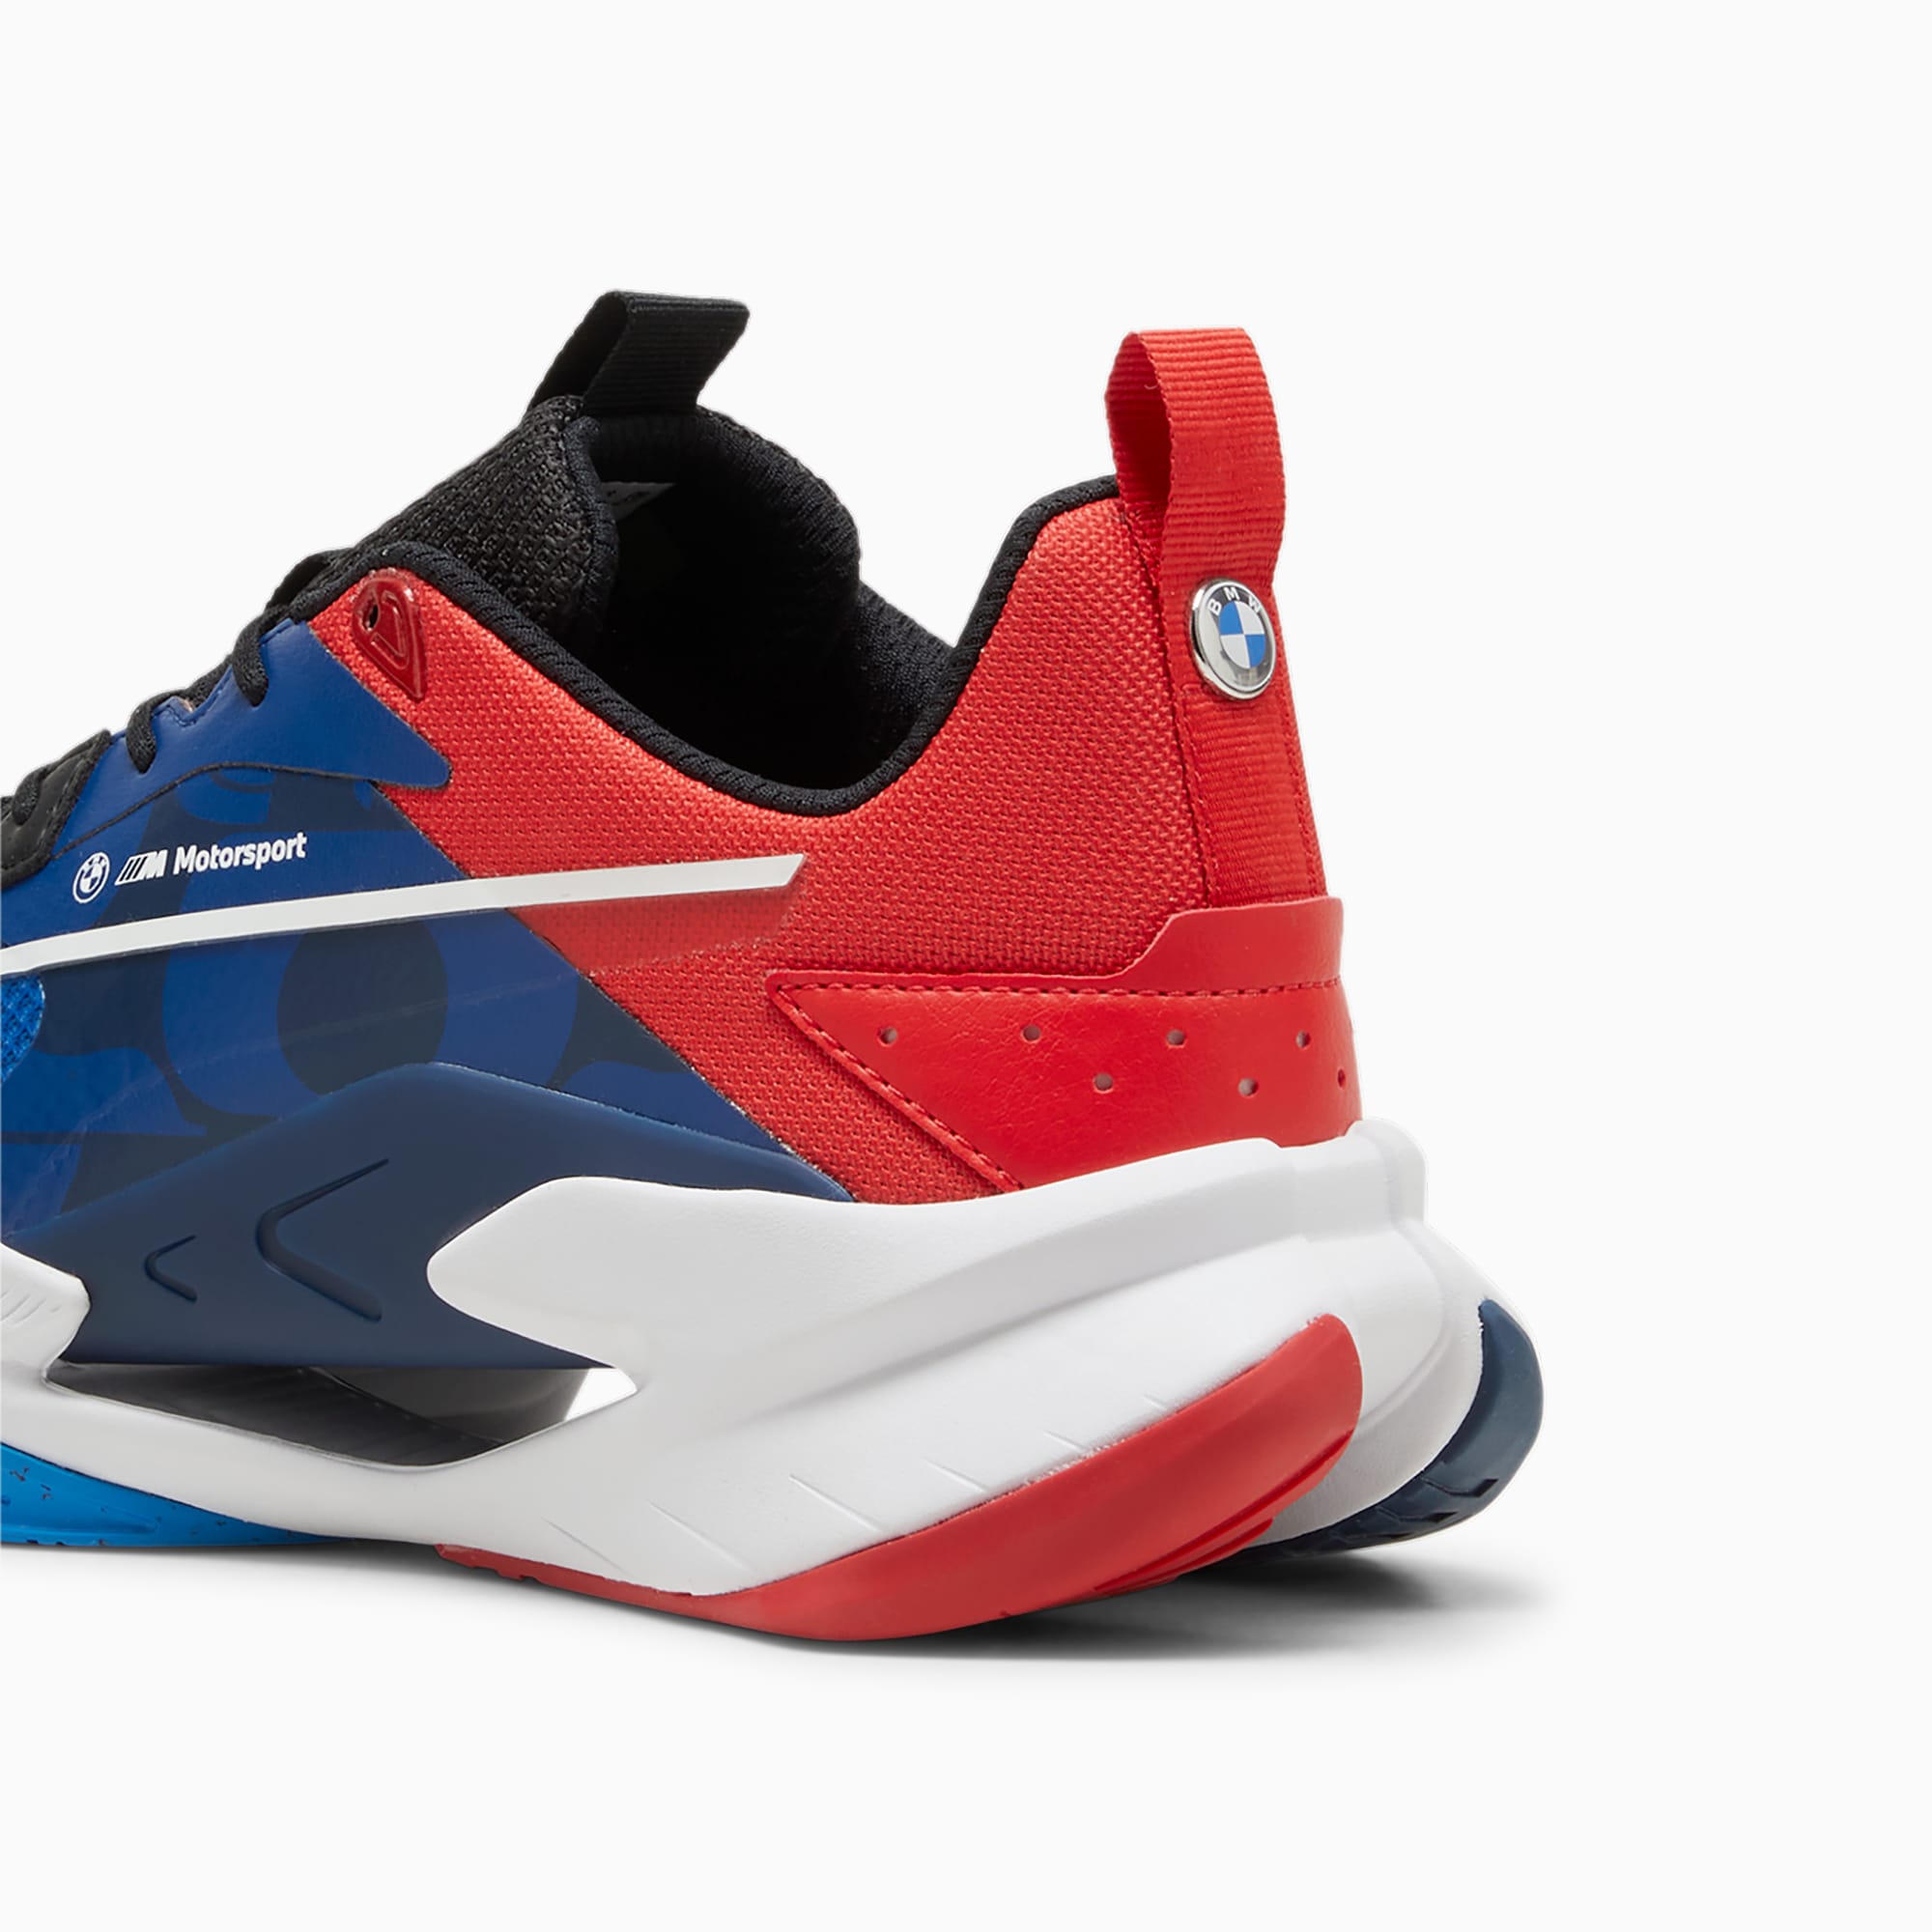 PUMA BMW M Motorsport LGND Renegade Sneakers Schuhe, Rot/Blau, Größe: 41, Schuhe